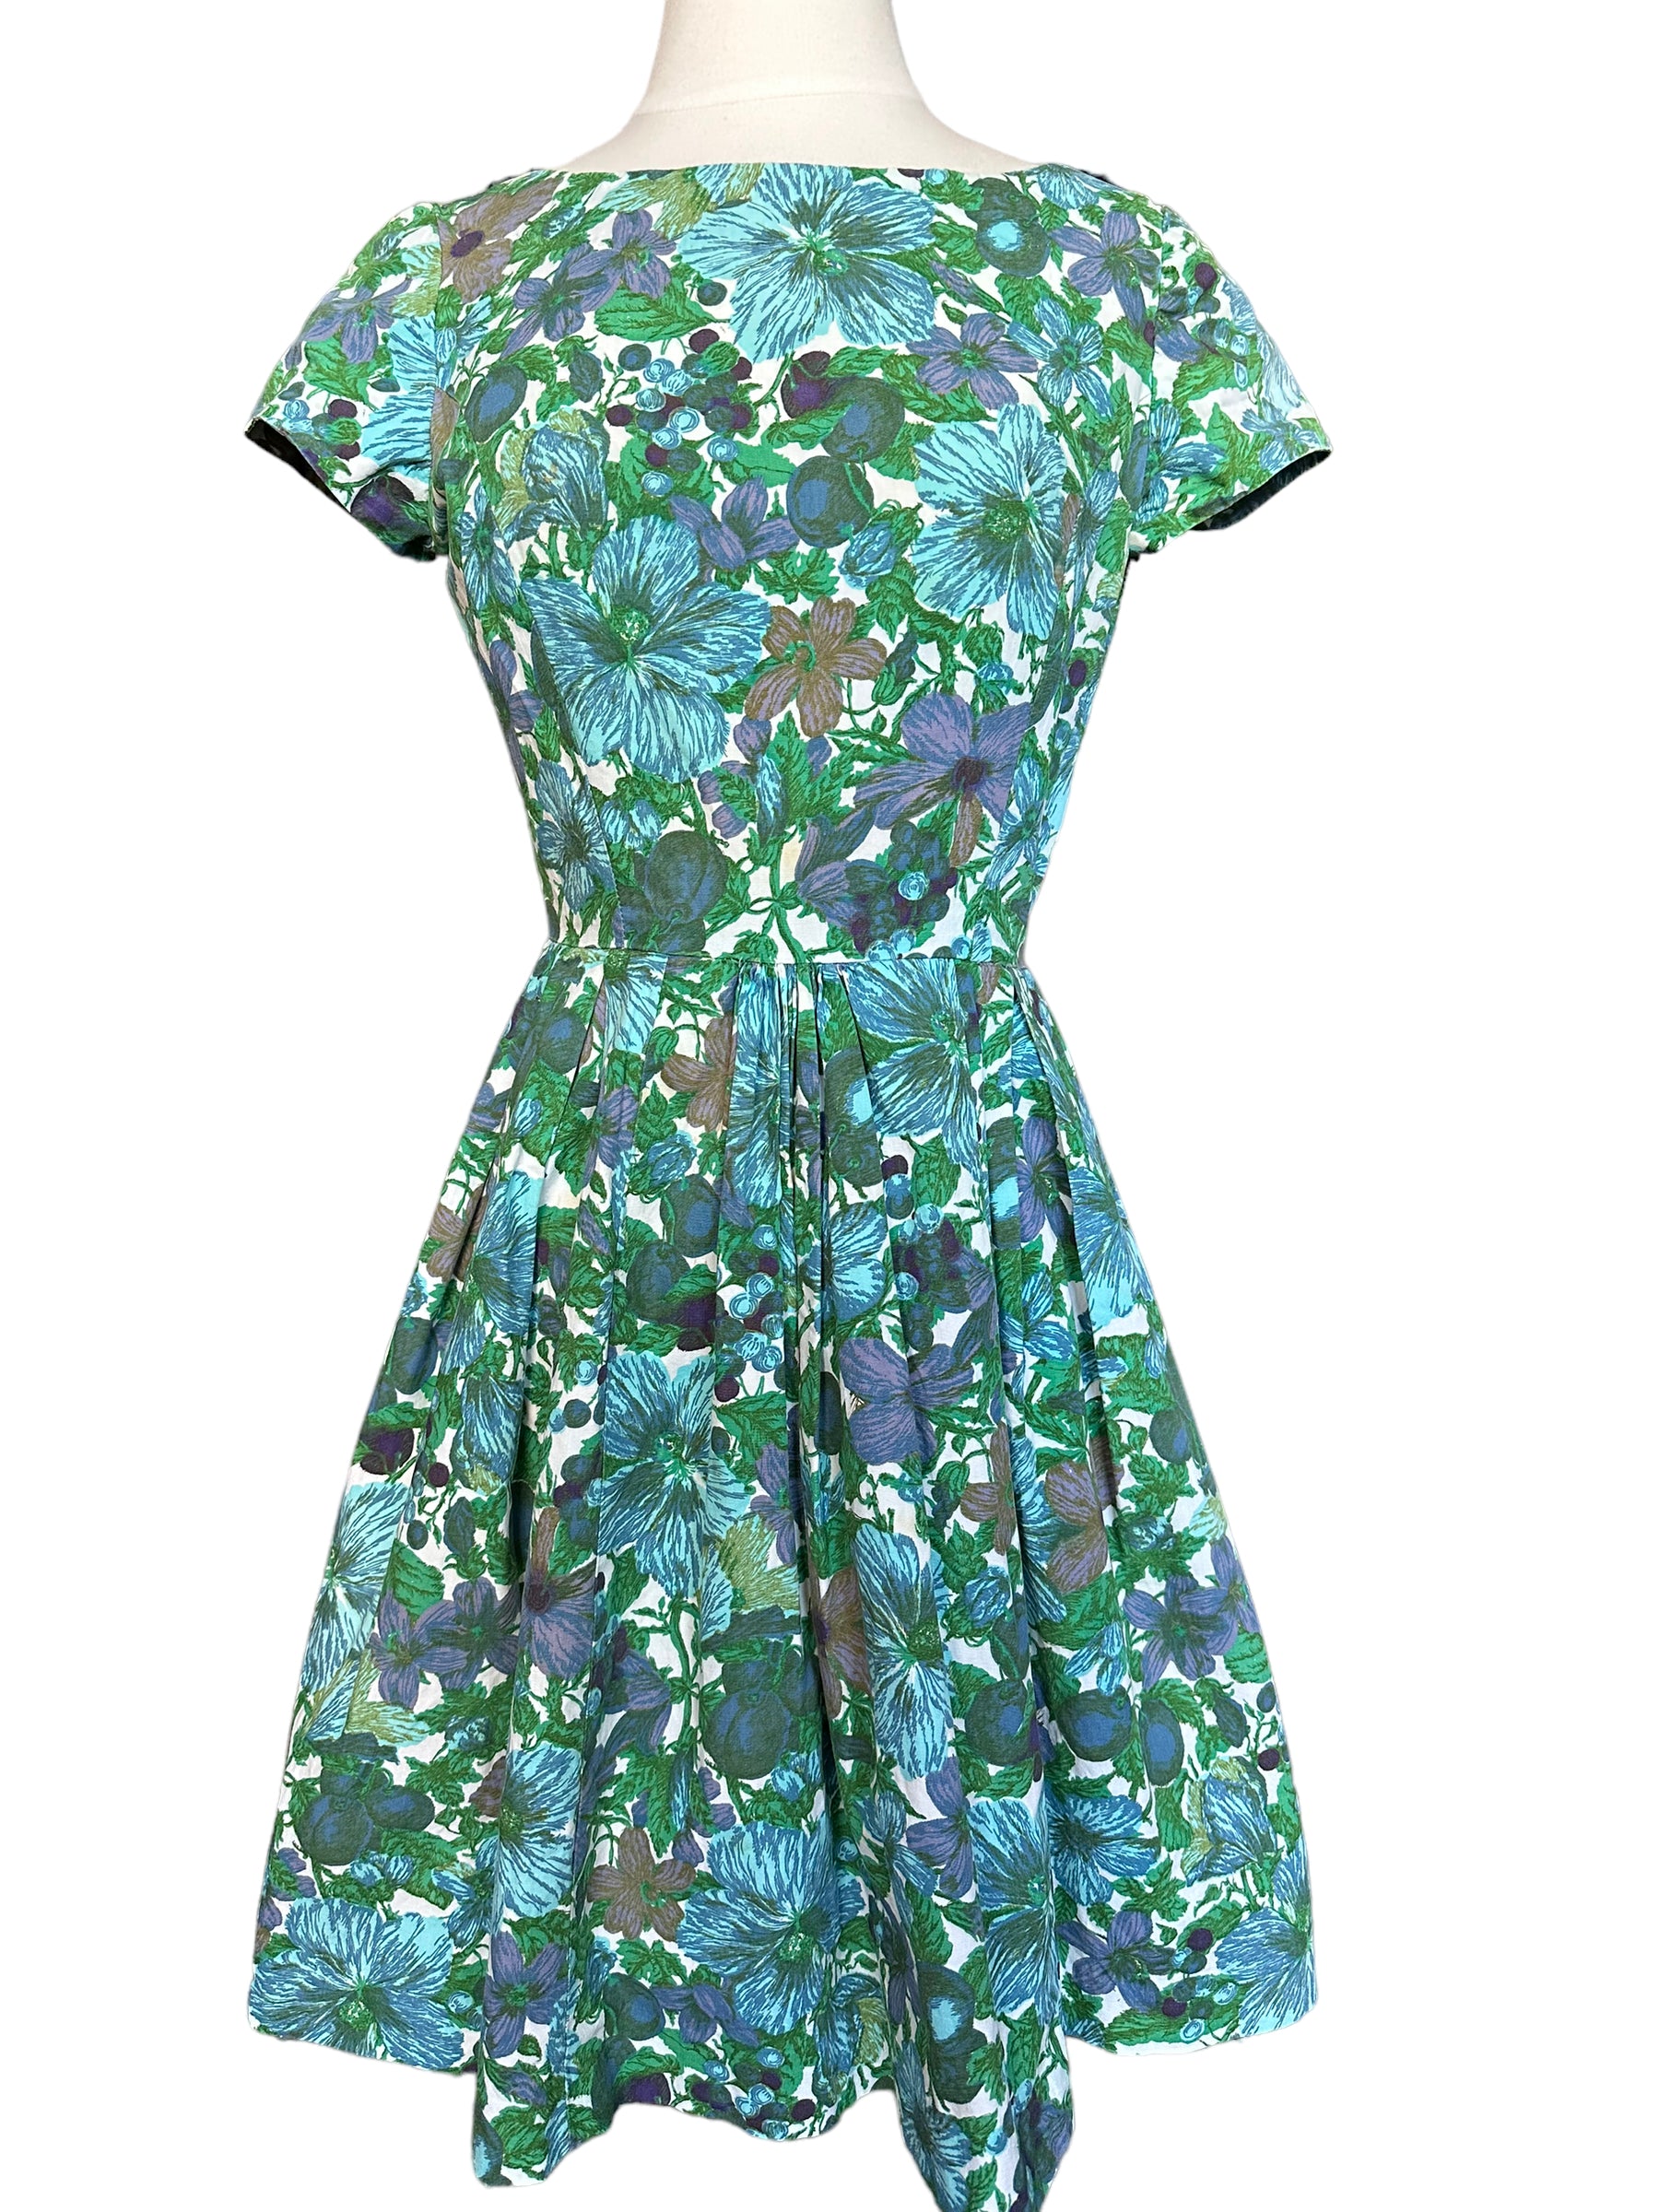 Full front view of Vintage 1950s Blue Floral Cotton Dress |  Barn Owl True Vintage | Seattle Vintage Dresses